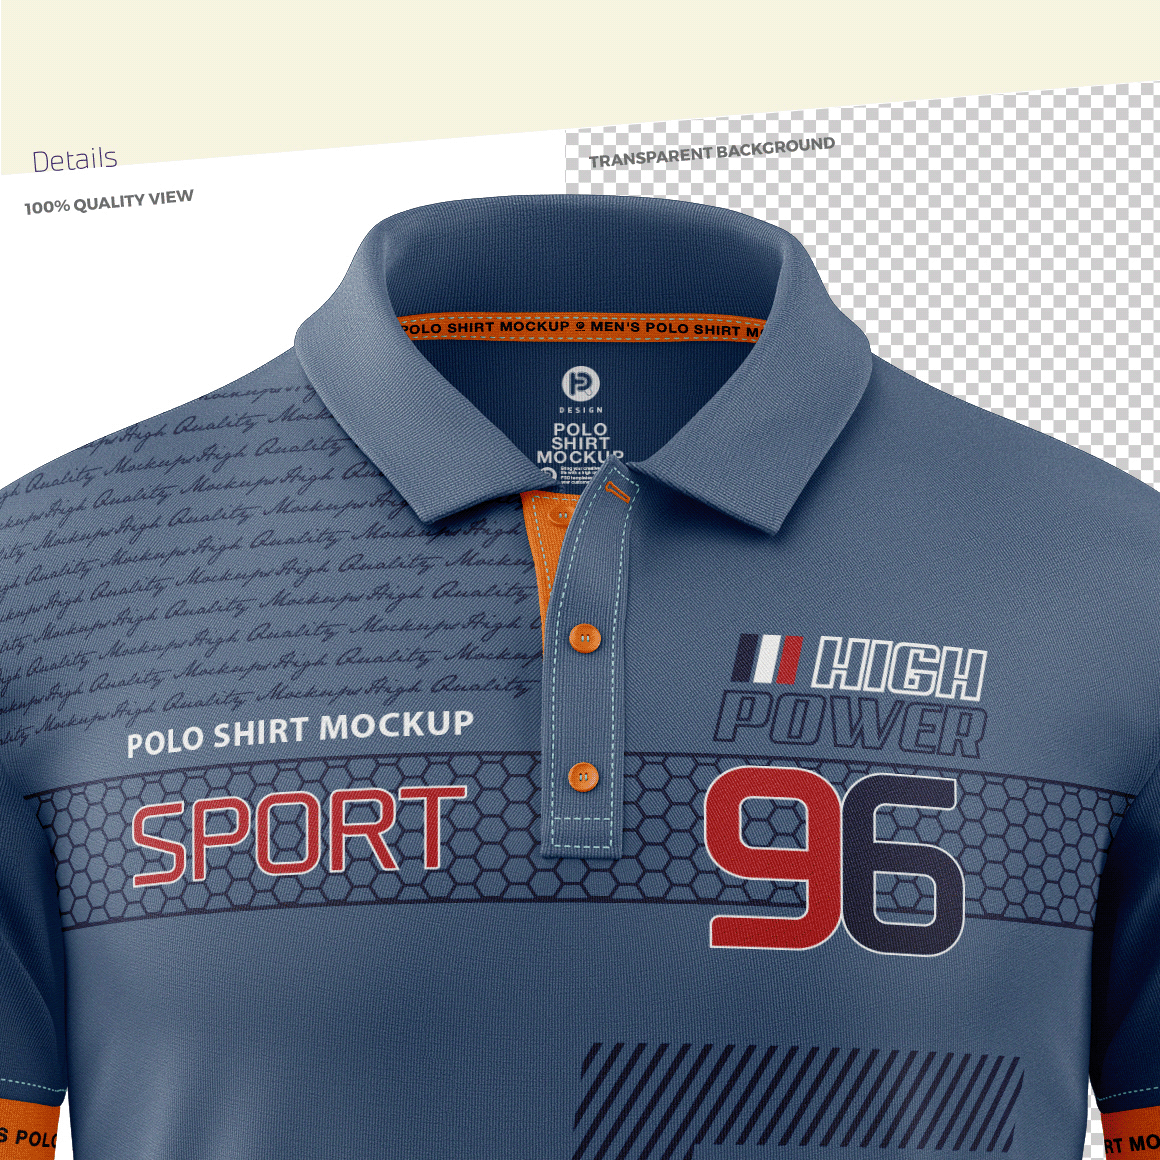 apparel Clothing golf Mockup polo shirt shirt sports Sports Design t-shirt tennis